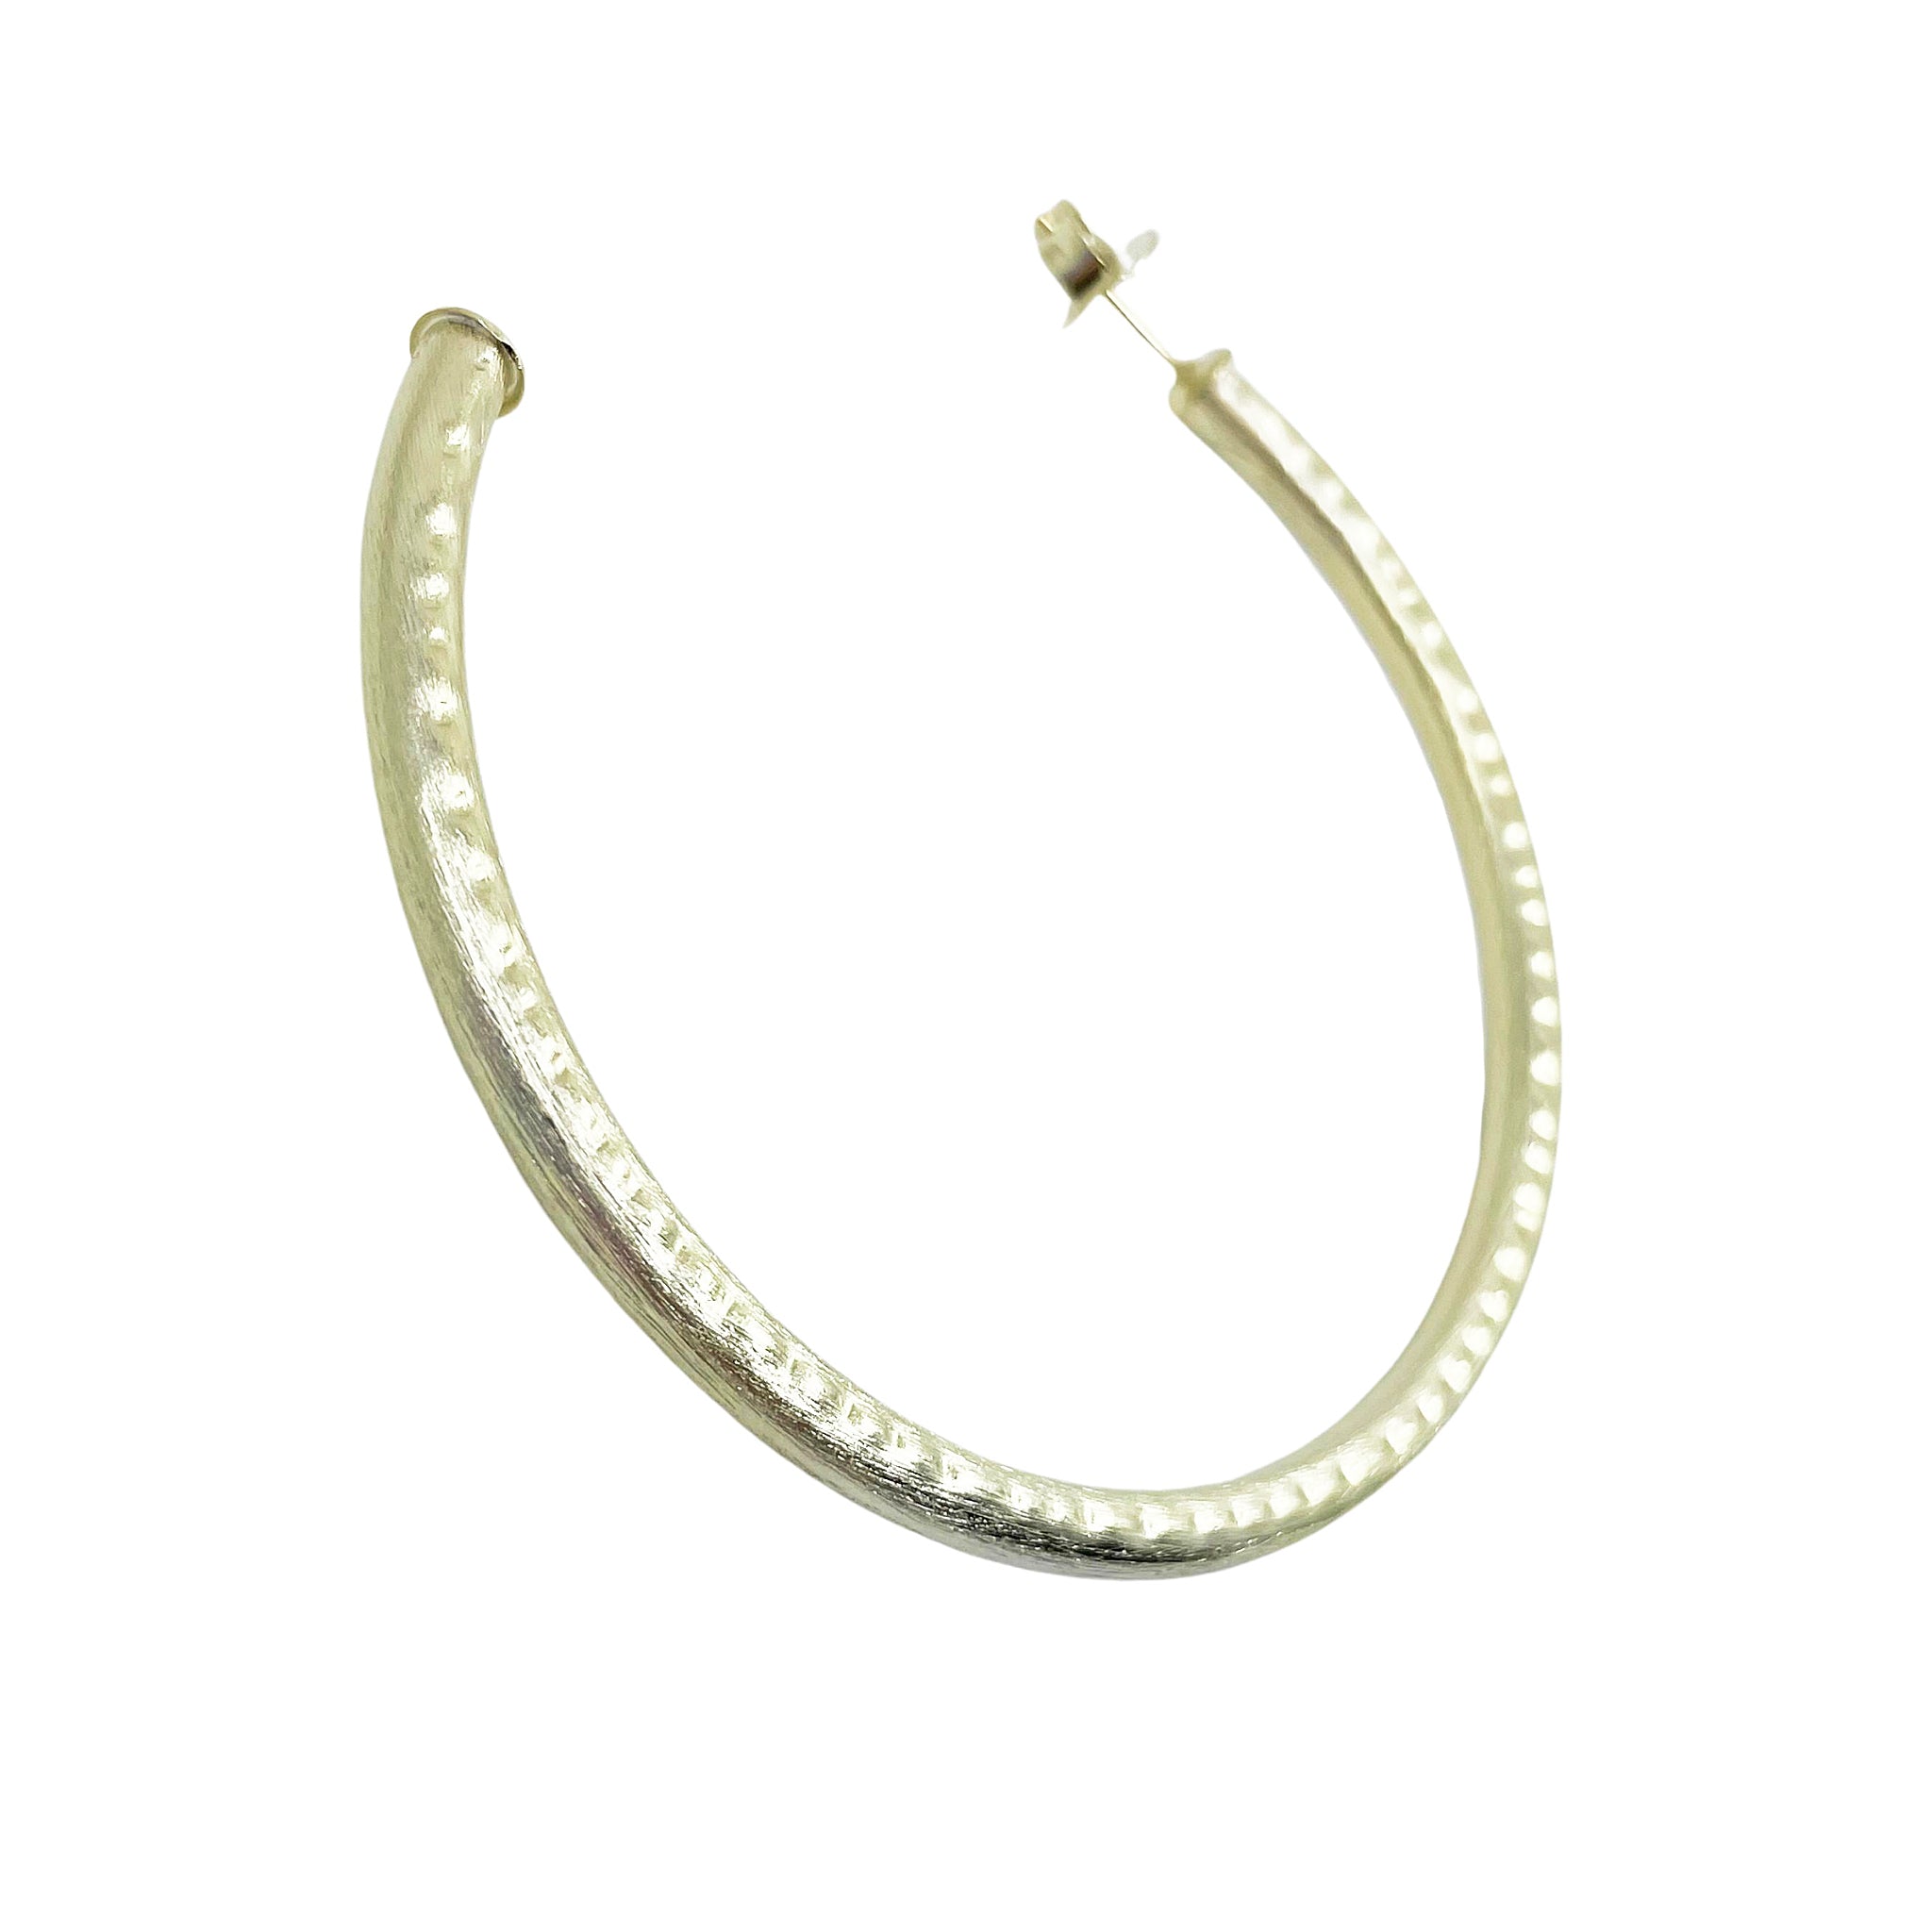 Sheila Fajl Large 2.5 Inch Everybody's Favorite Hammered Hoop Earrings in Gold